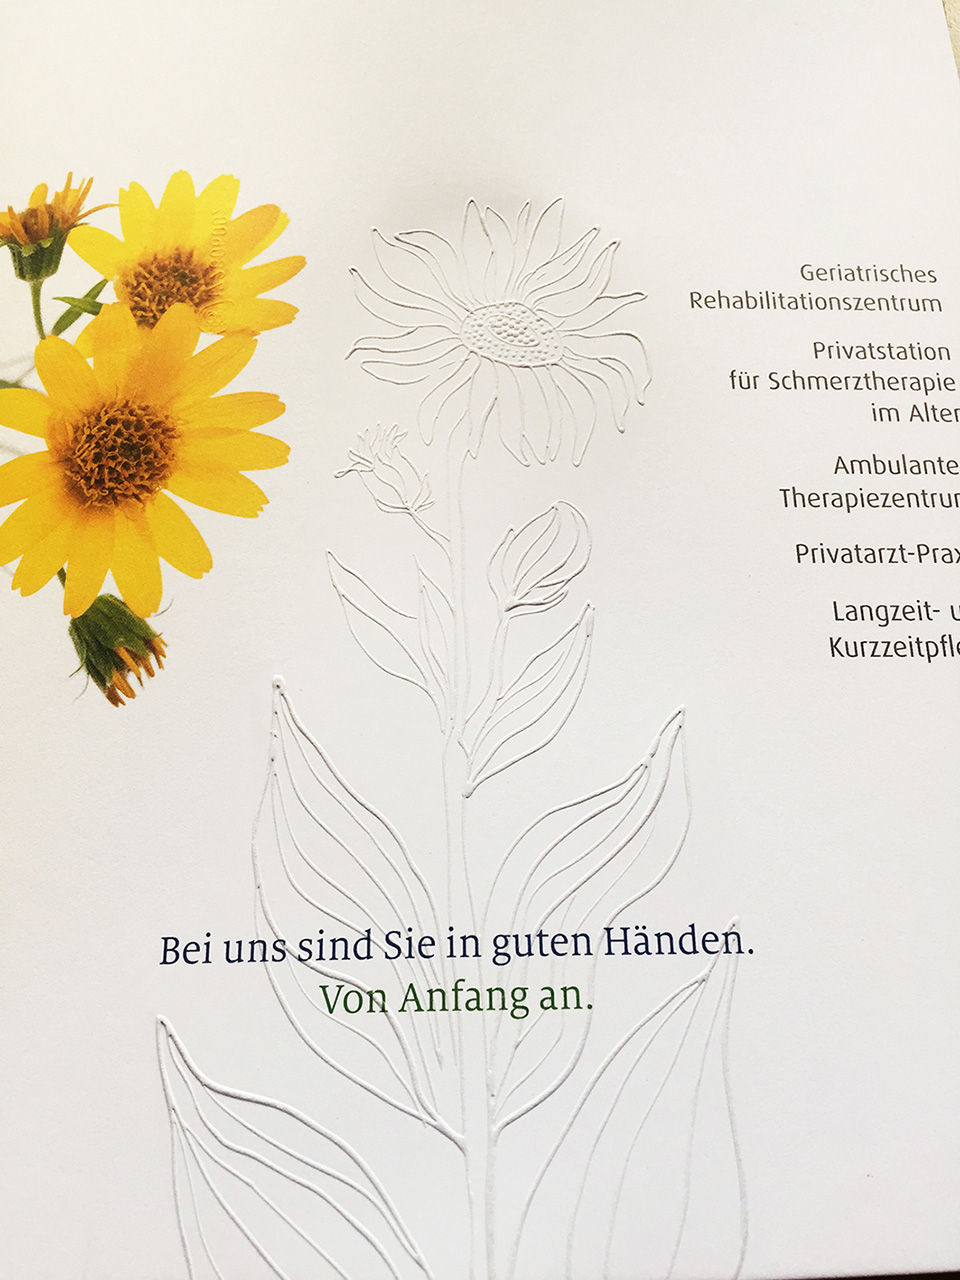 Humboldt Integrative Broschüre Humboldt becomes a brand